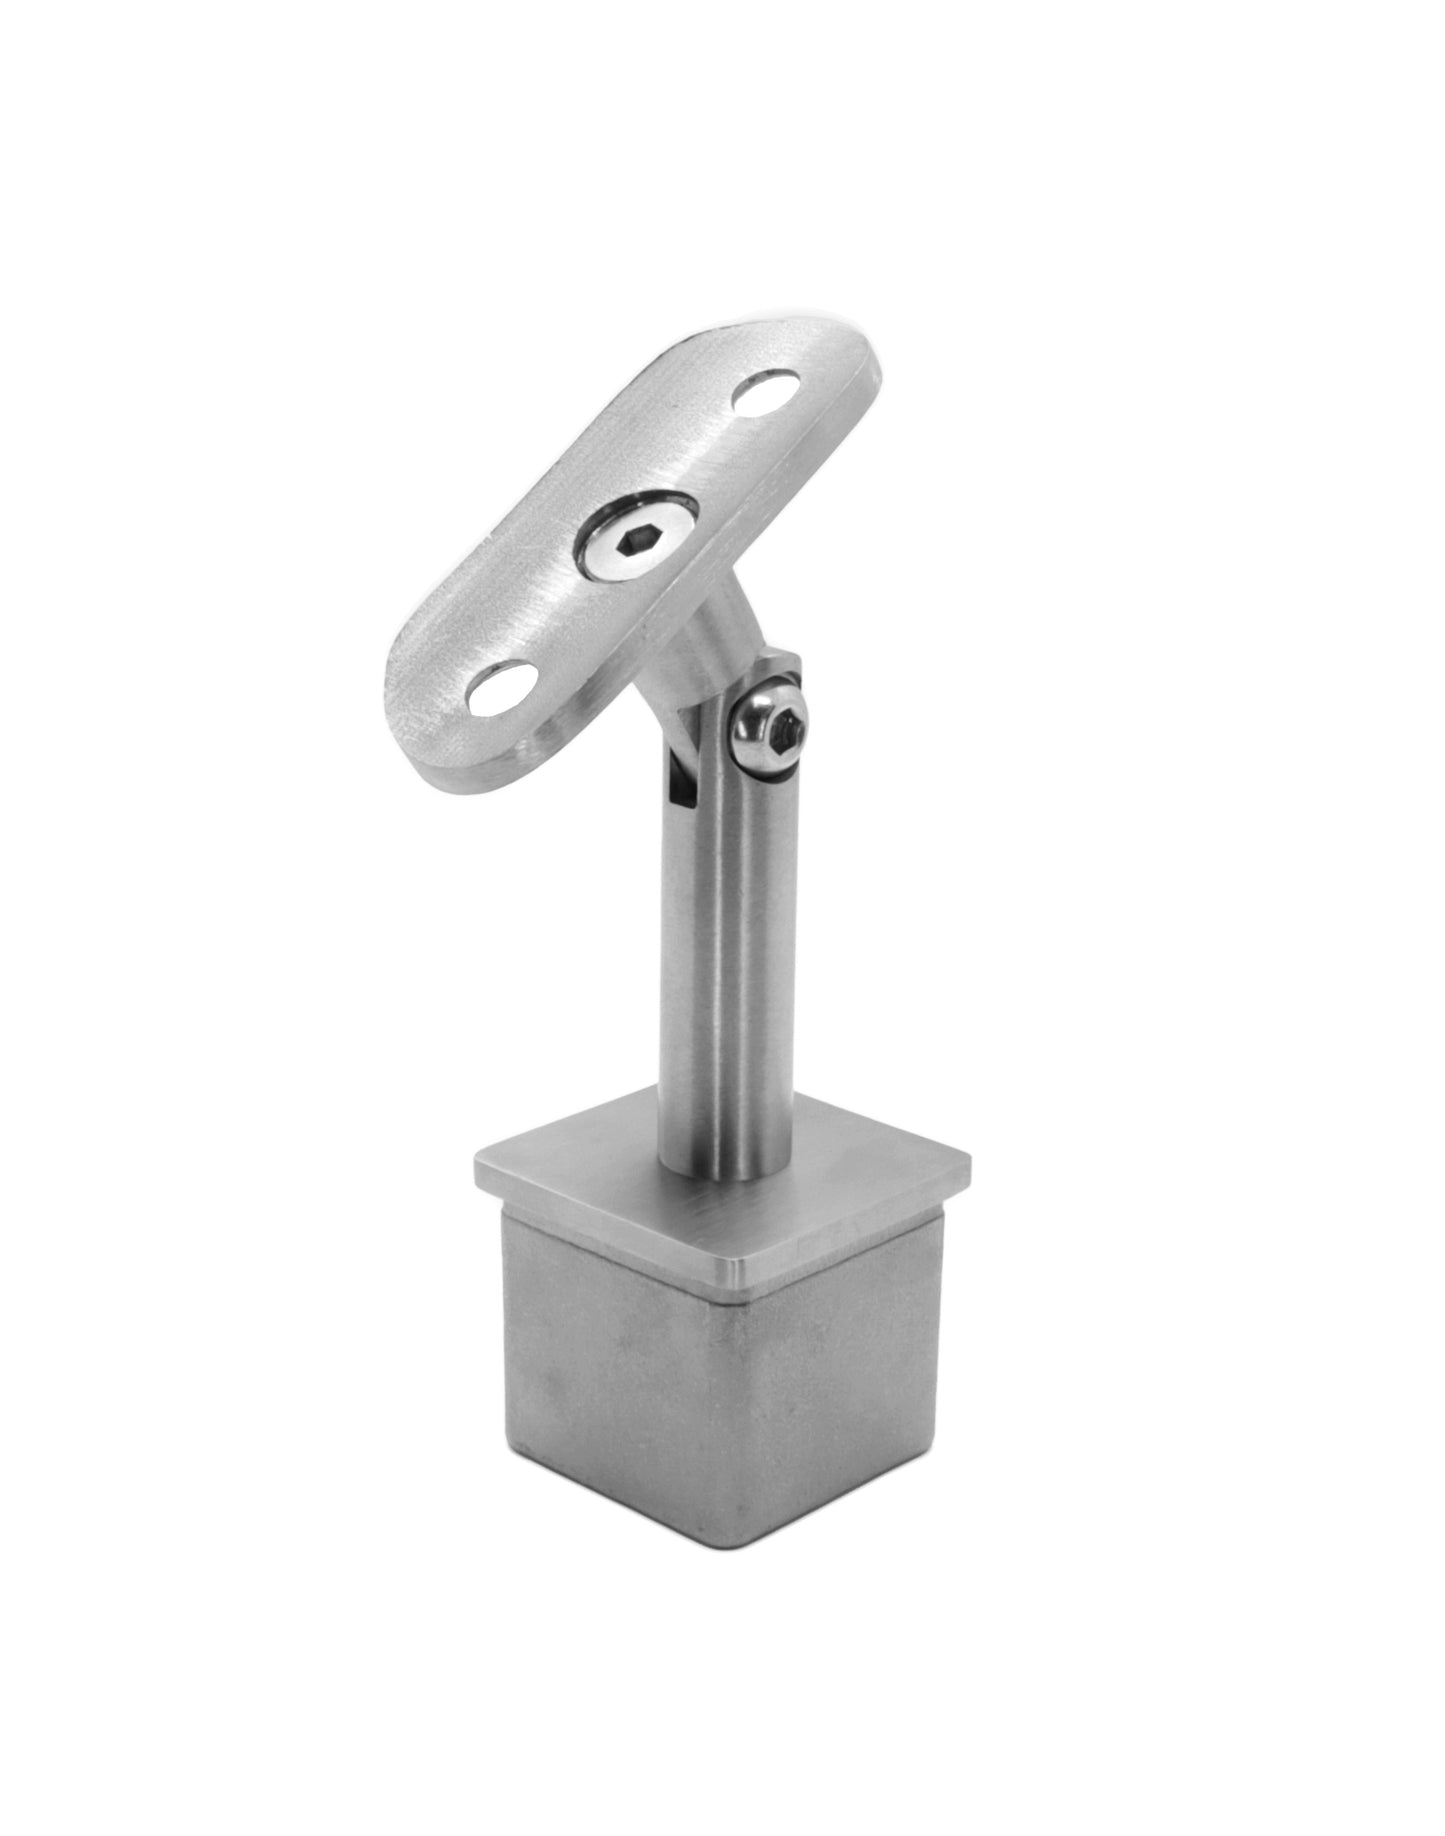 Adjustable Round Stem Post Handrail Bracket Stainless Steel for 1-1/2" Post Fitting (P0150-ADJ-TOP-ROUND) - SHEMONICO